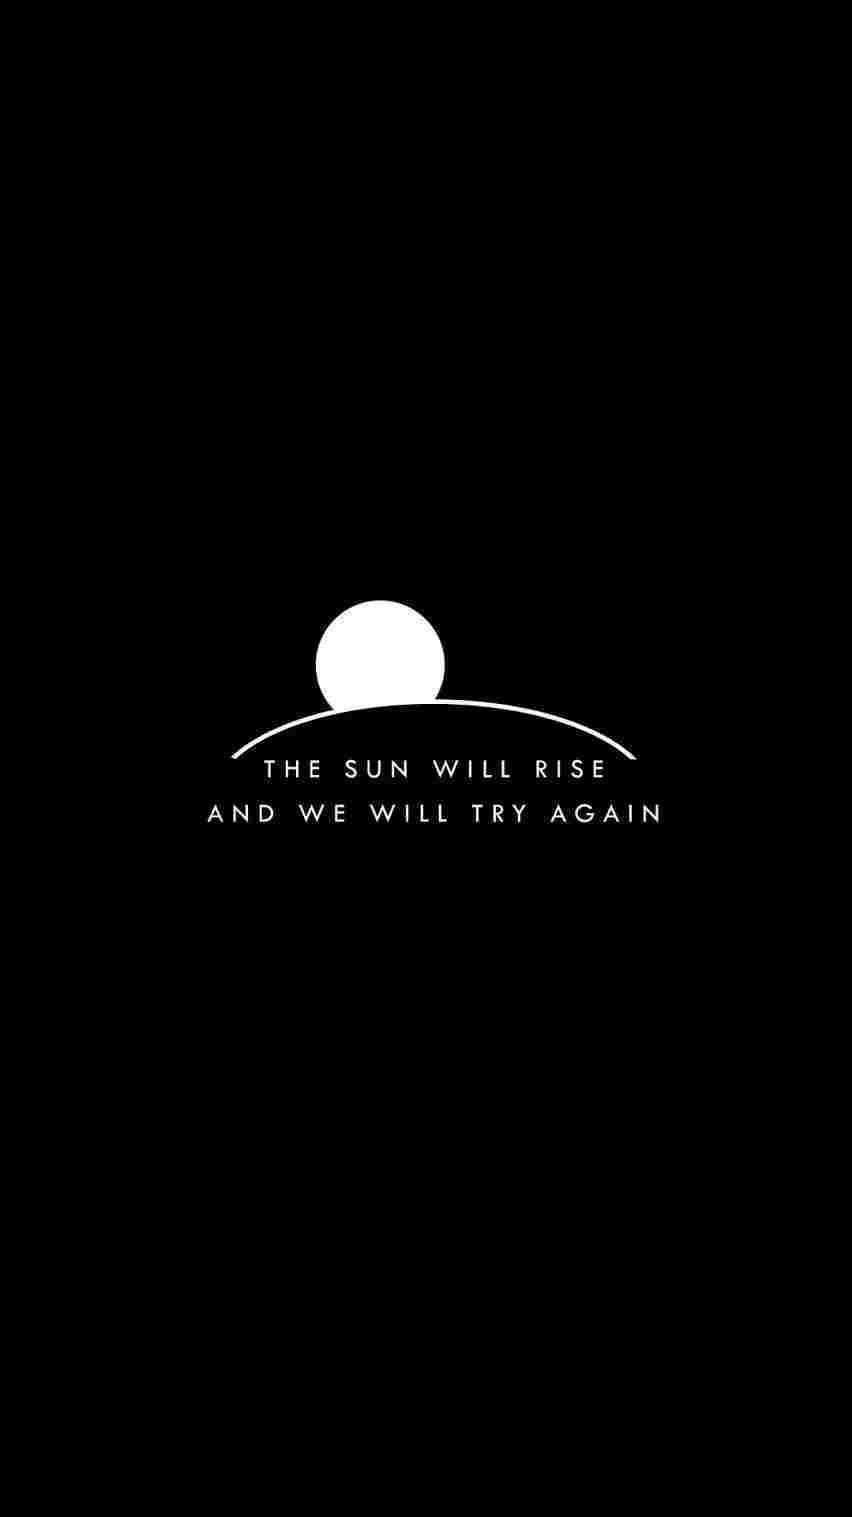 The sun will rise and we shall overcome - July, black glitch, sun